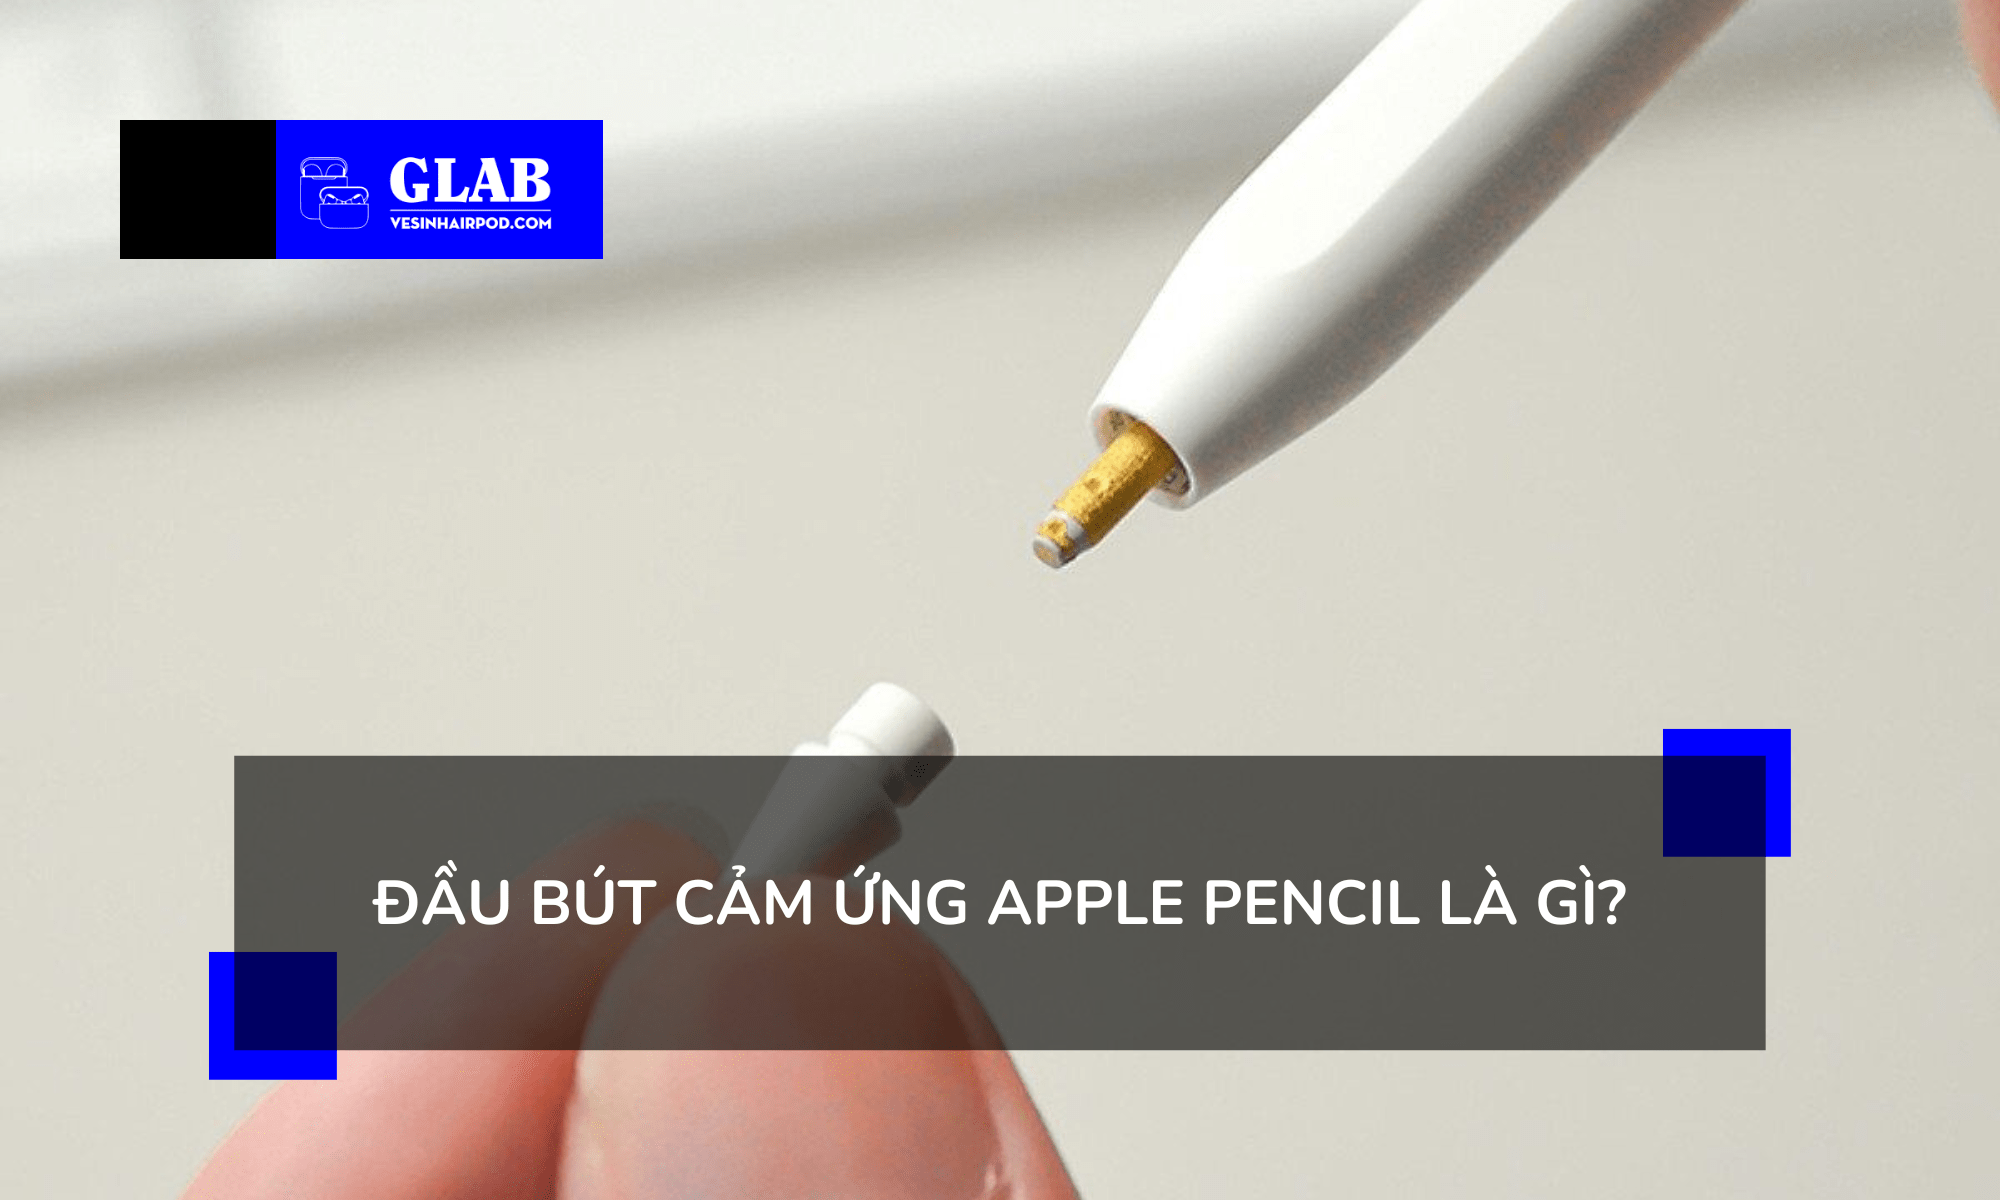 thay-dau-but-apple-pencil